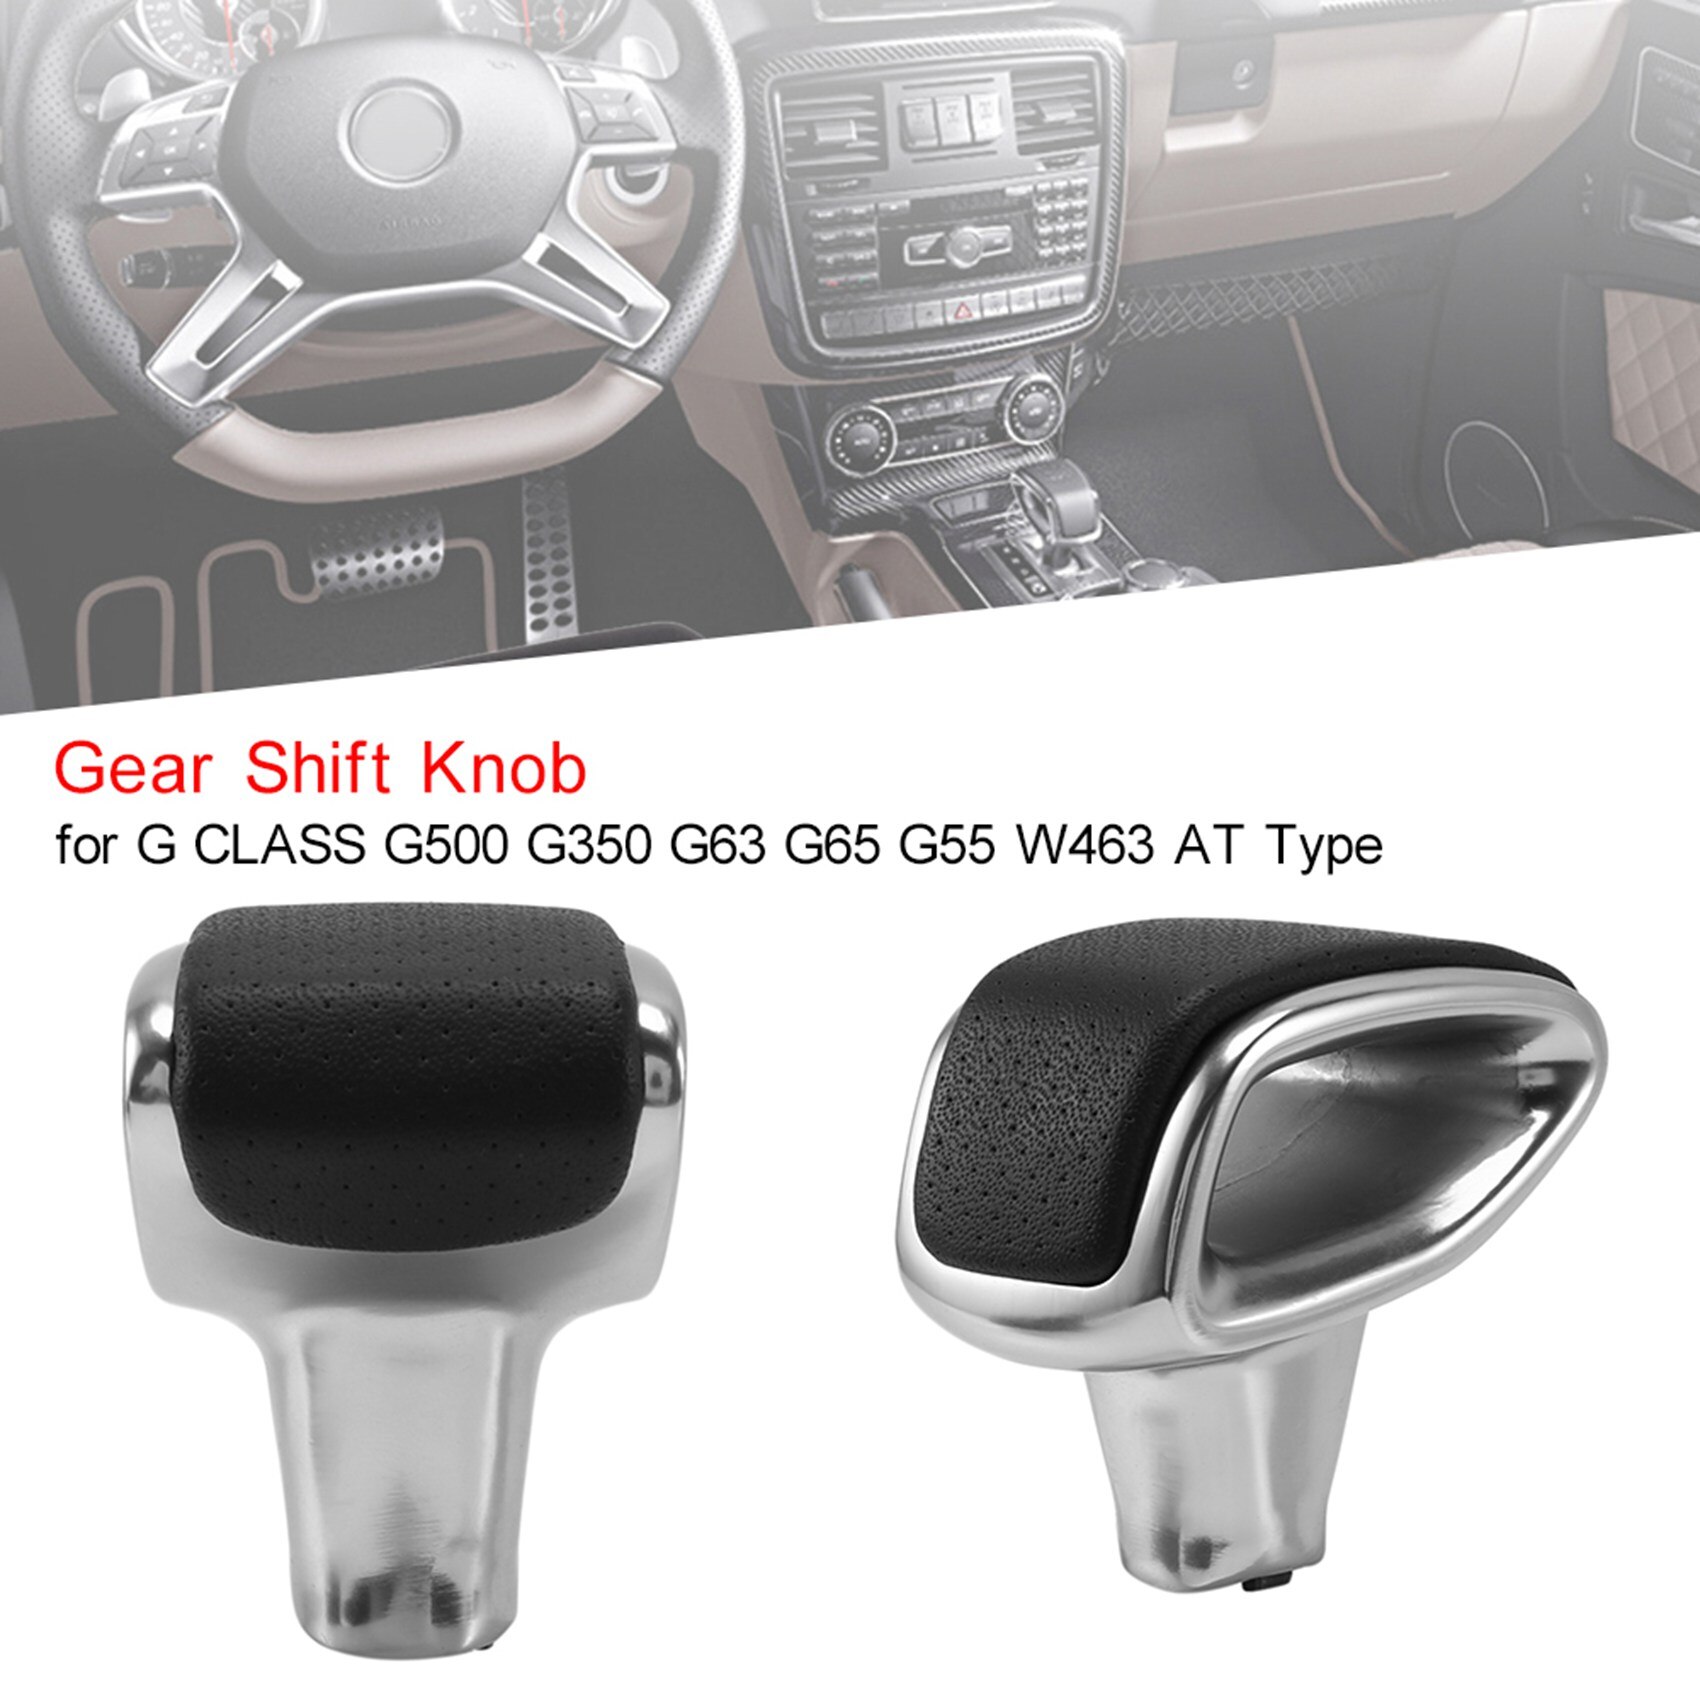 Car Gear Shift Knob Leather Metal Gear Shift Head With Hole for Benz G-CLASS G500 G350 G63 G65 G55 W463 AT Type